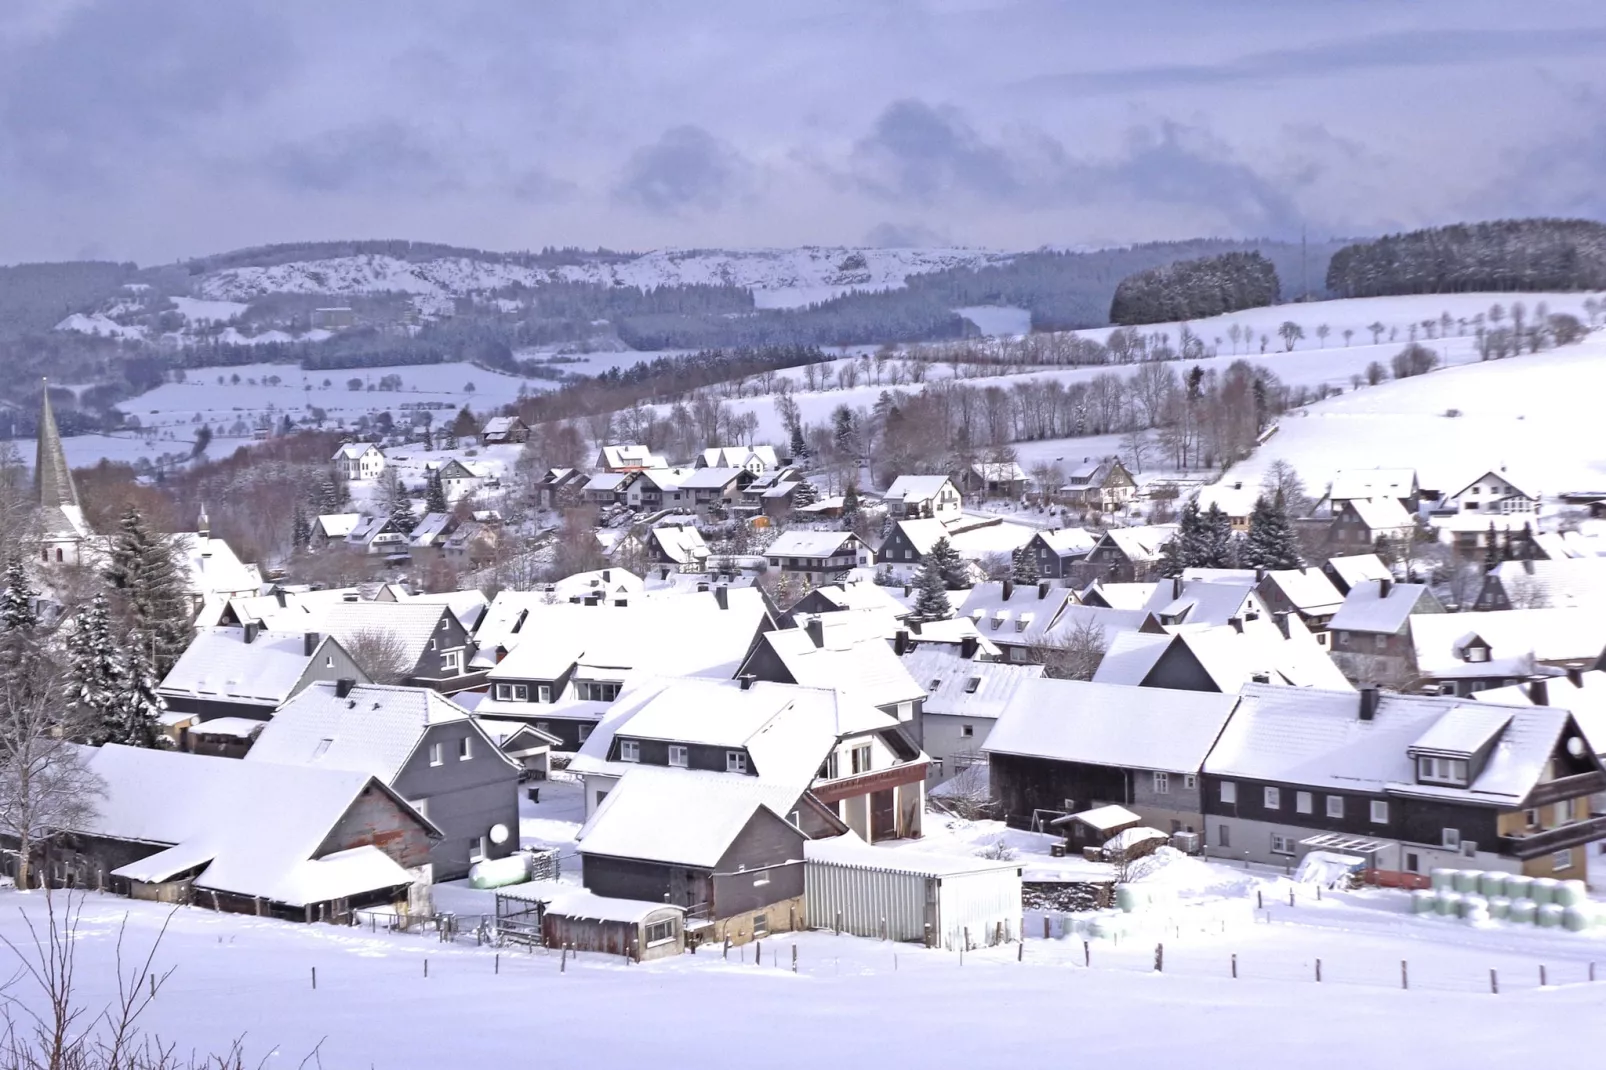 Grönebach-Gebied winter 5km